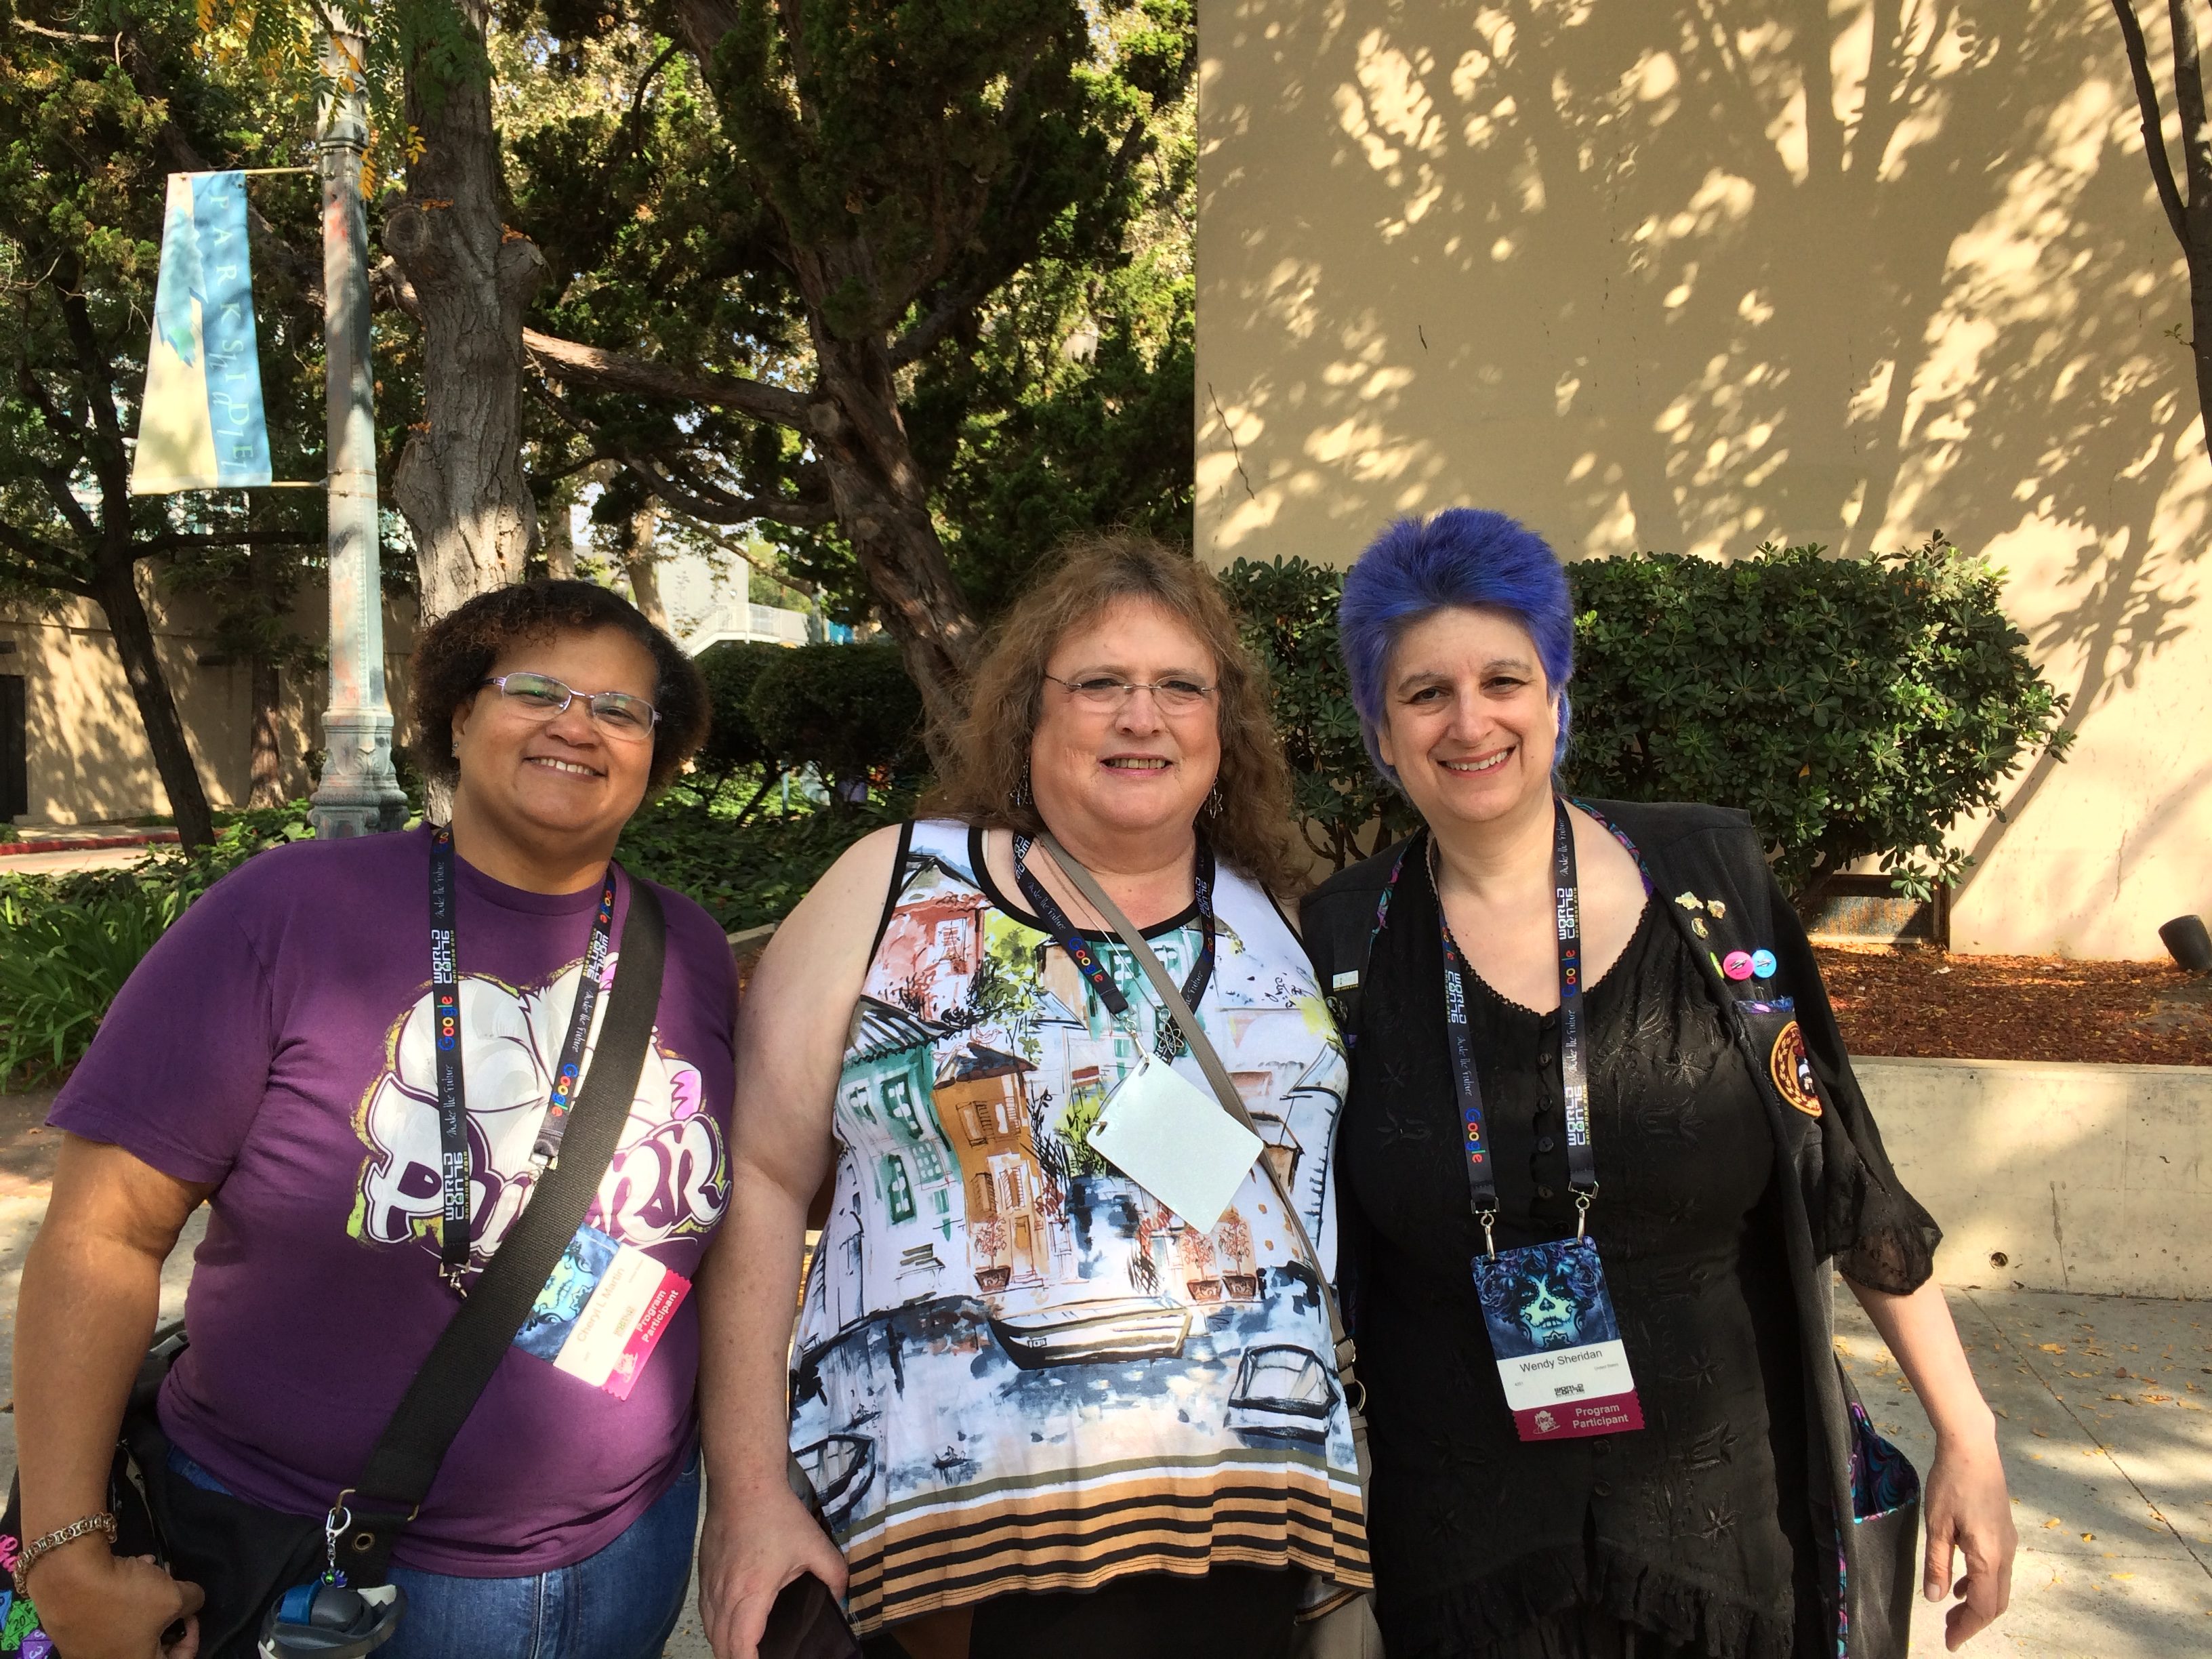 (L to R) Cheryl Martin, Joy Denebeim, and Wendy Sheridan at Worldcon76 in San Jose, CA, August 2018